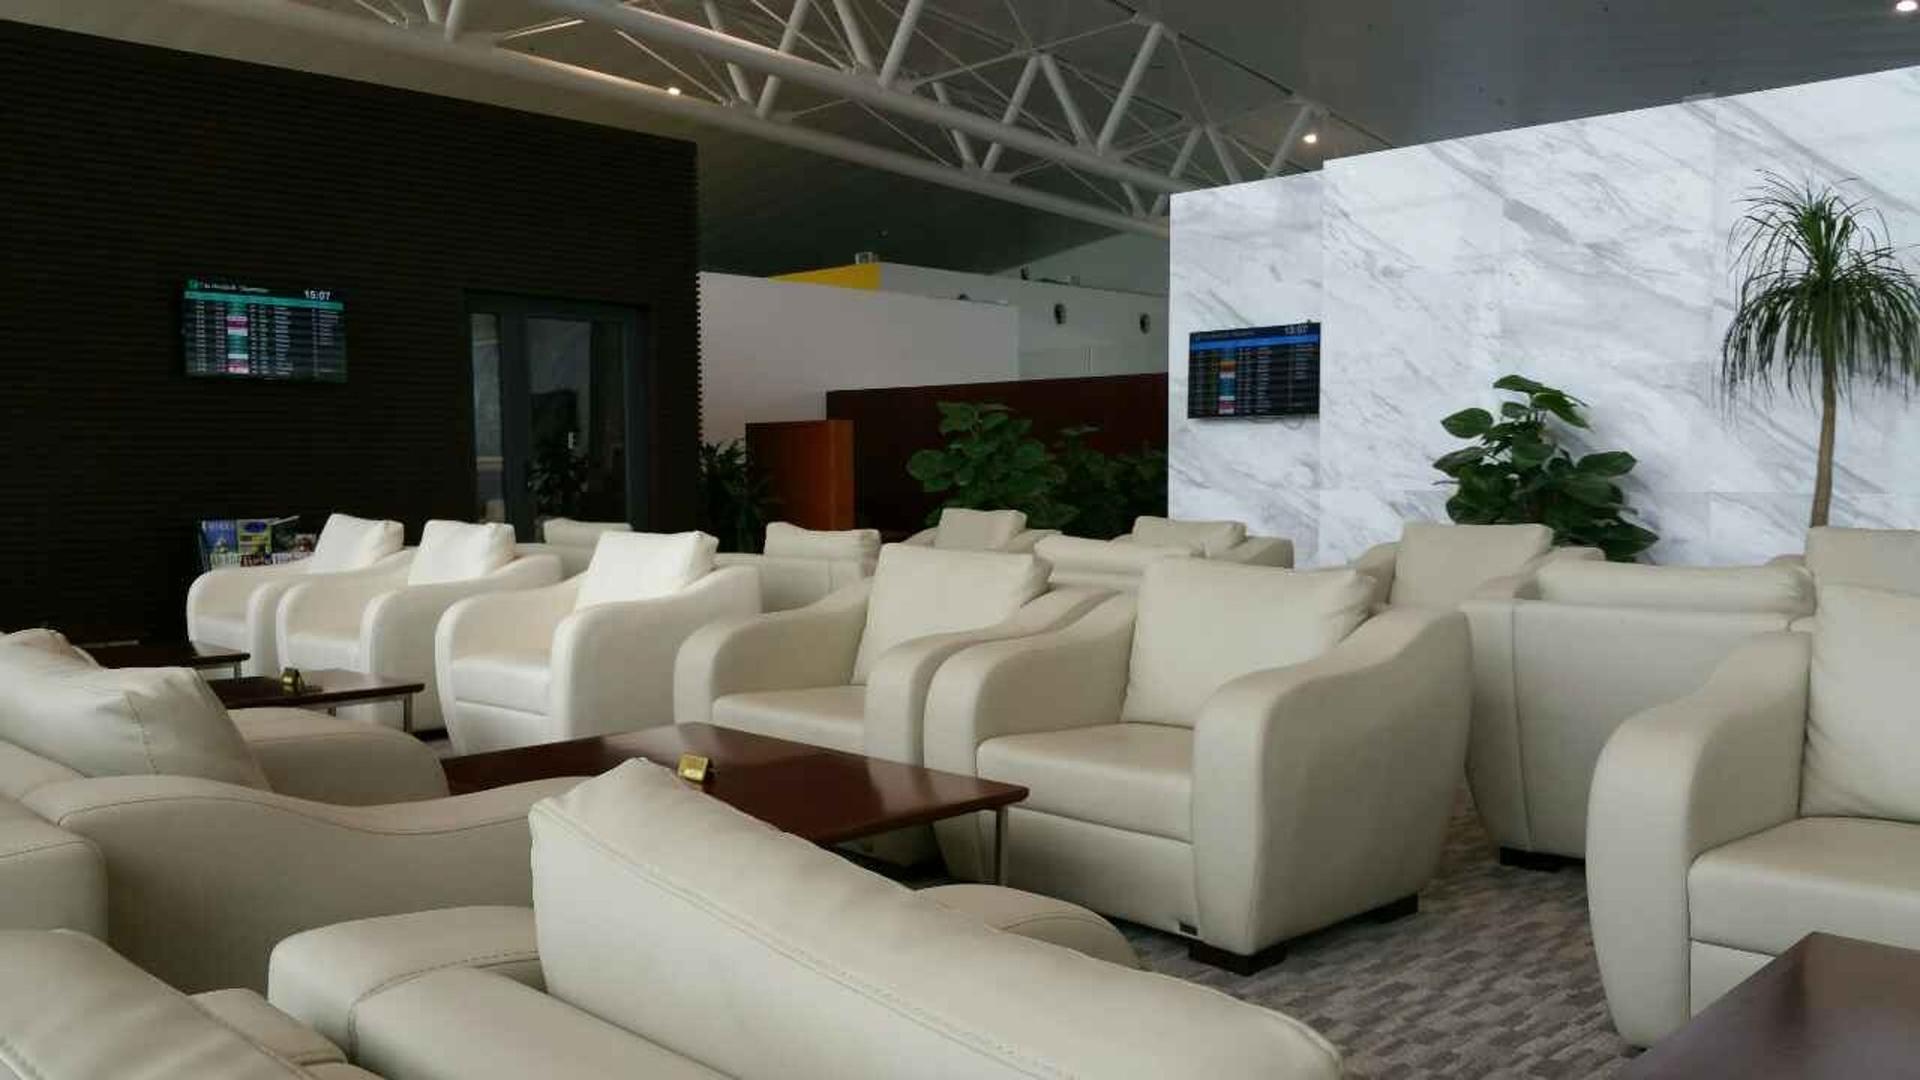 Noi Bai International Airport Business Lounge image 4 of 26